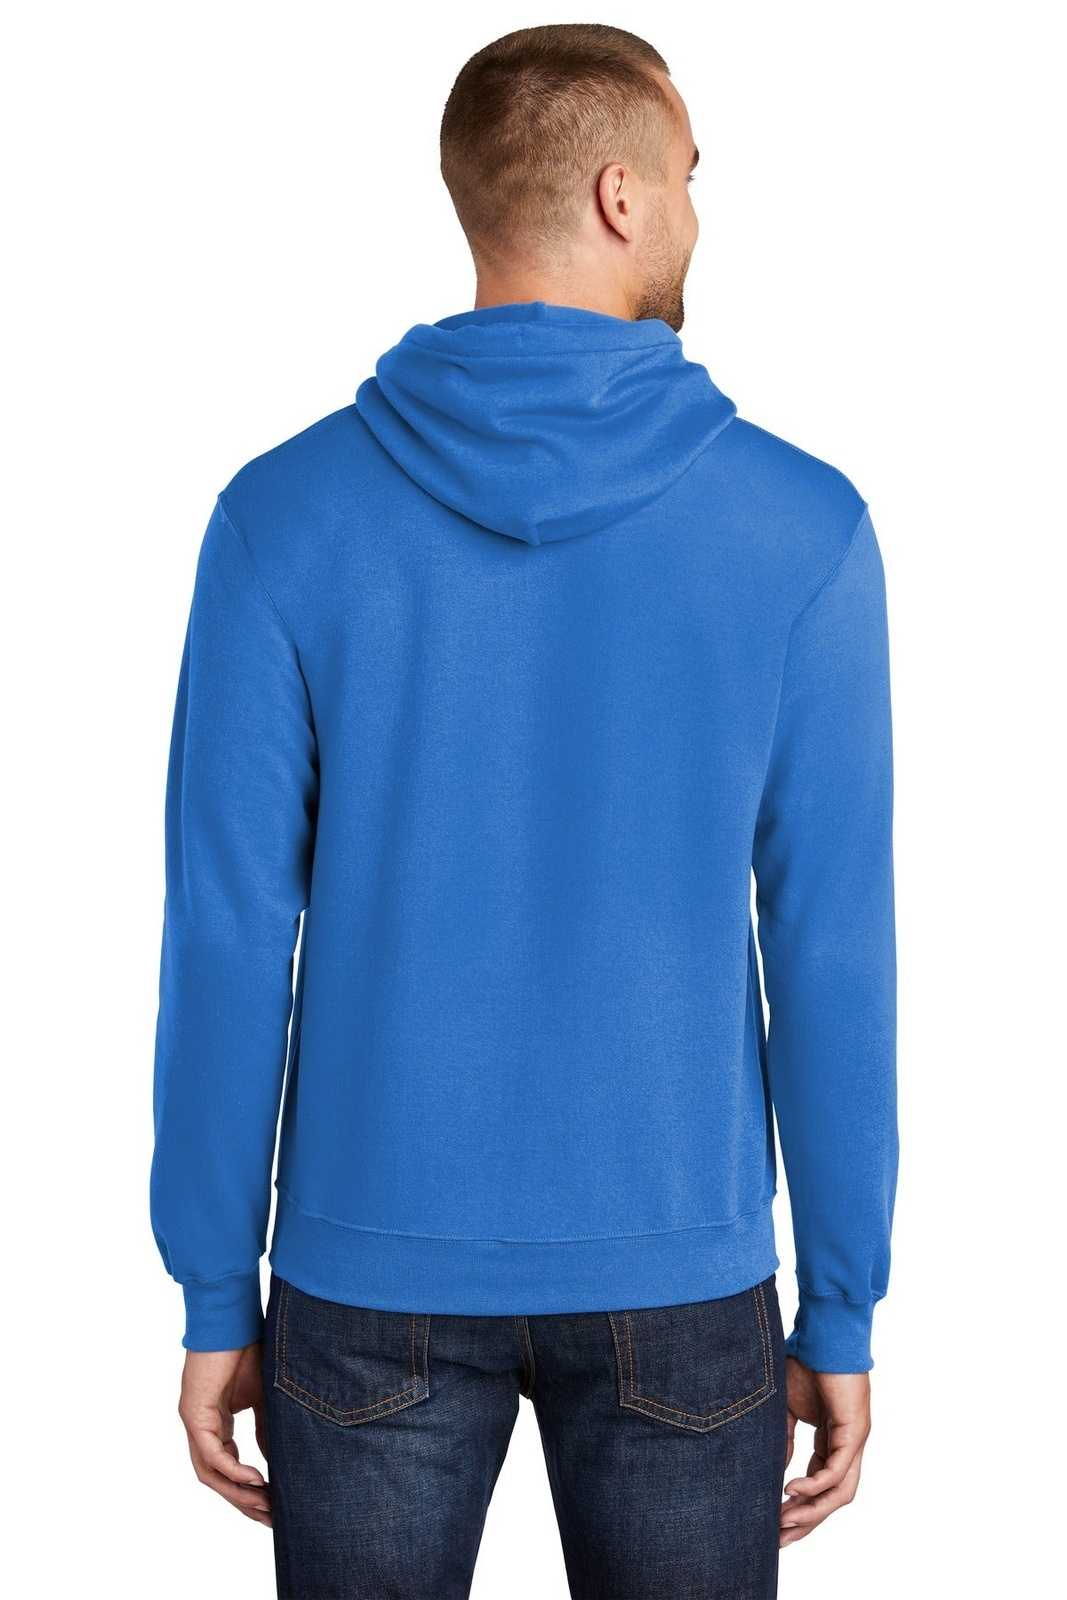 Port & Company PC78HT Tall Core Fleece Pullover Hooded Sweatshirt - Royal - HIT a Double - 1